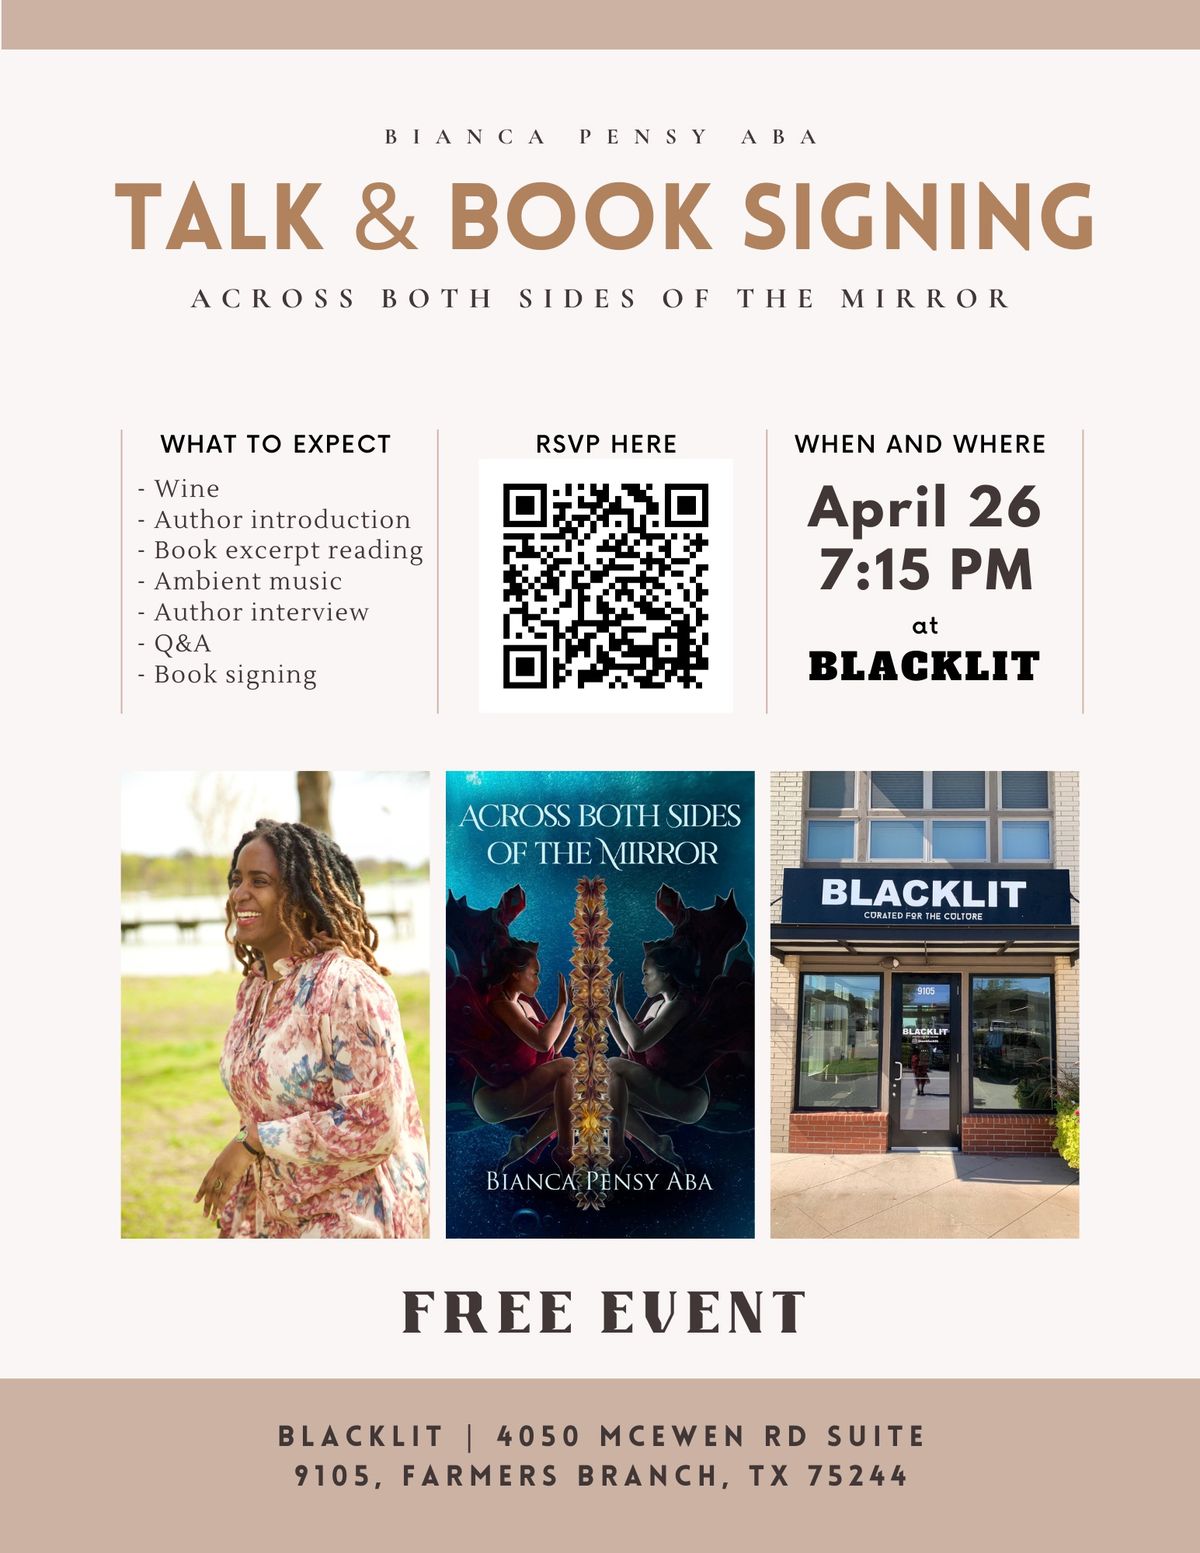 Talk & Book Signing at BLACKLIT